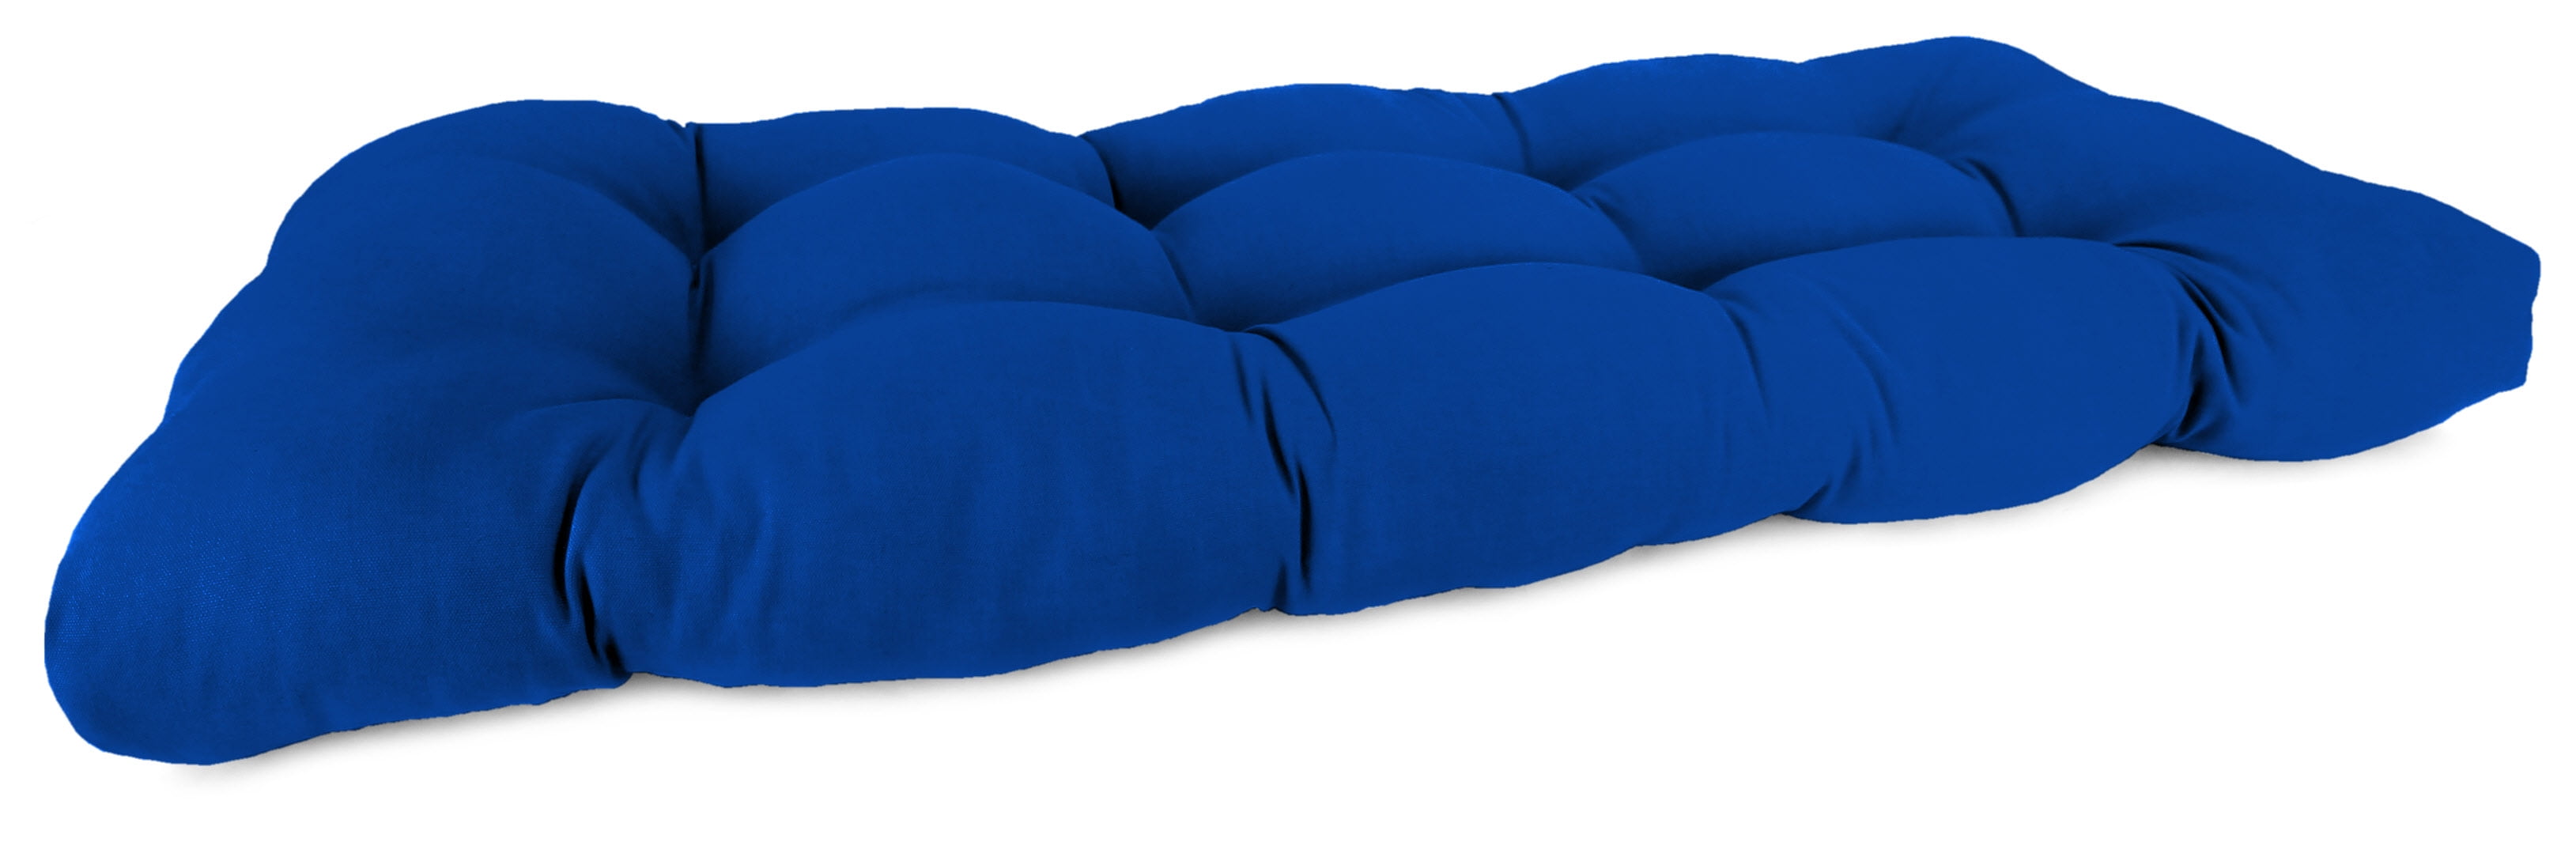 Outdoor Sofa & Loveseat Cushions - Walmart.com - Walmart.com